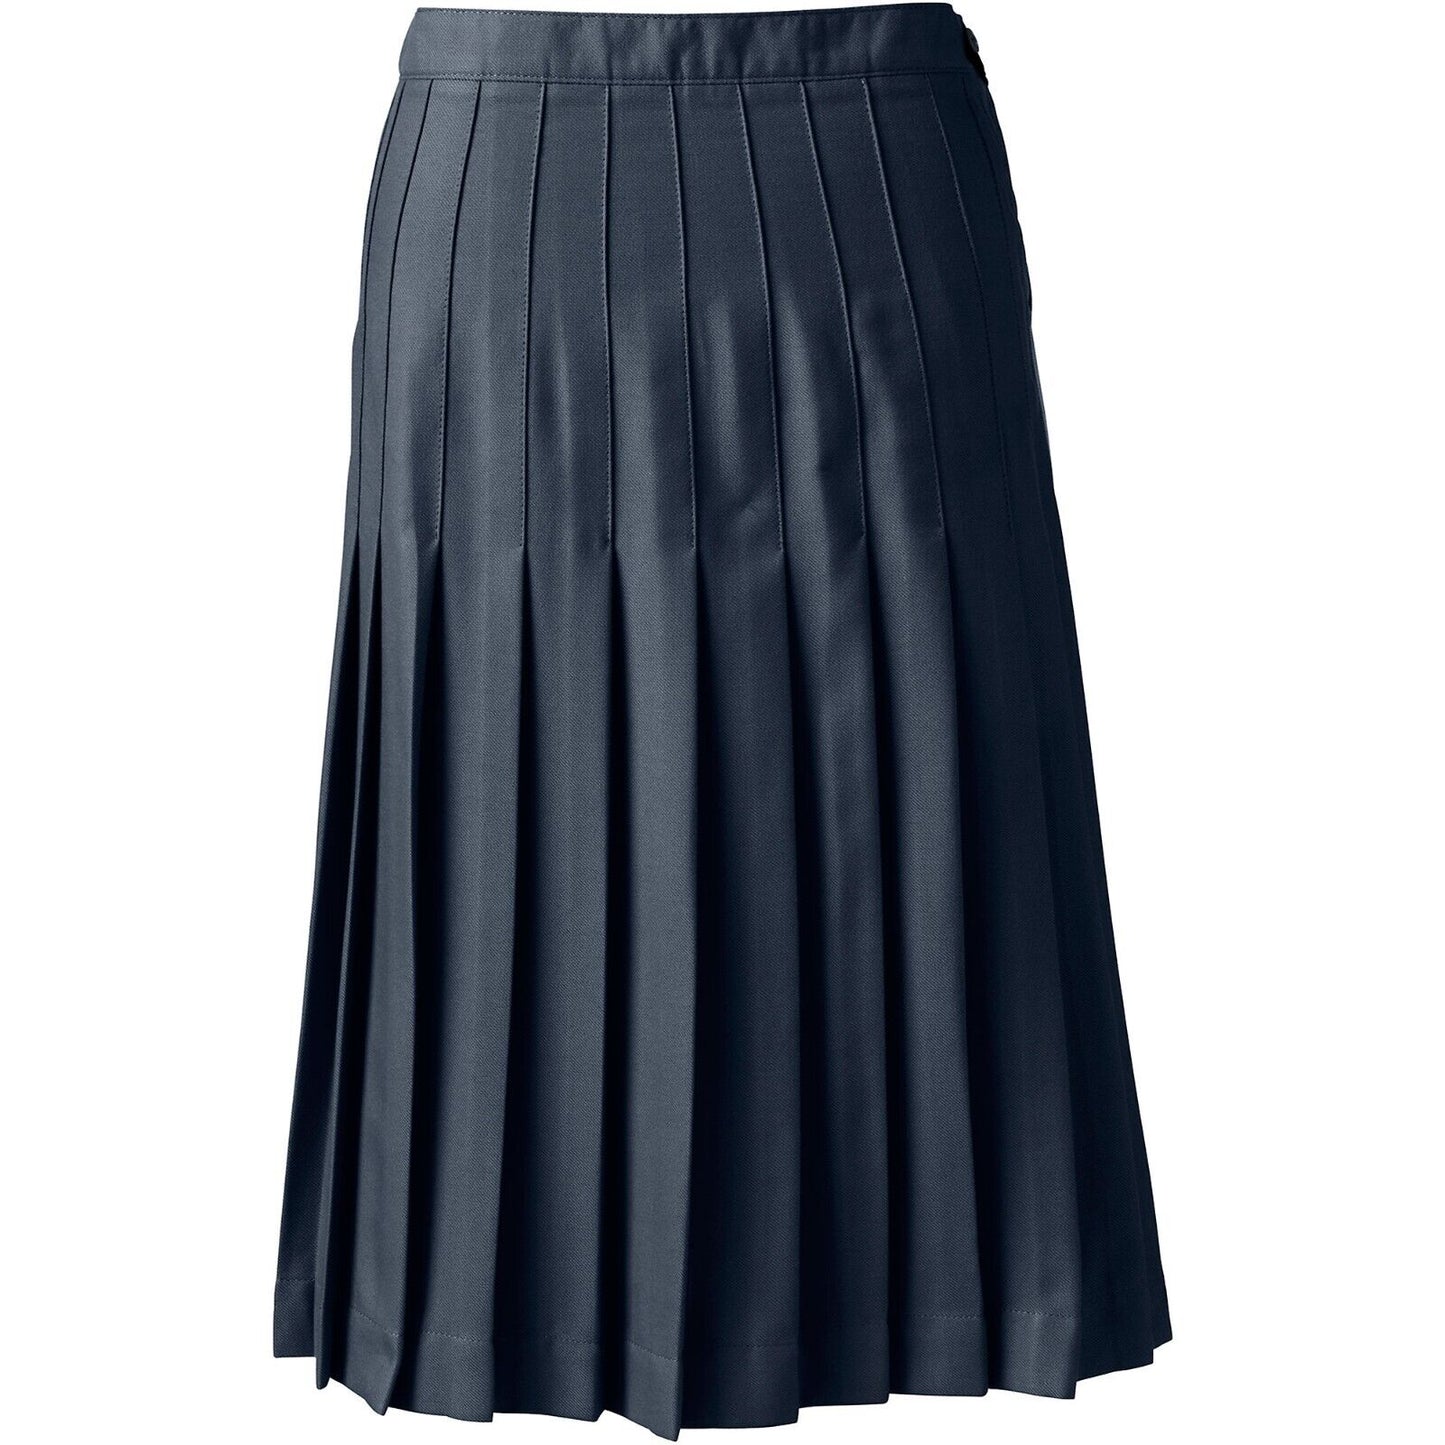 Women's Pleated Skirt Below the Knee size 8